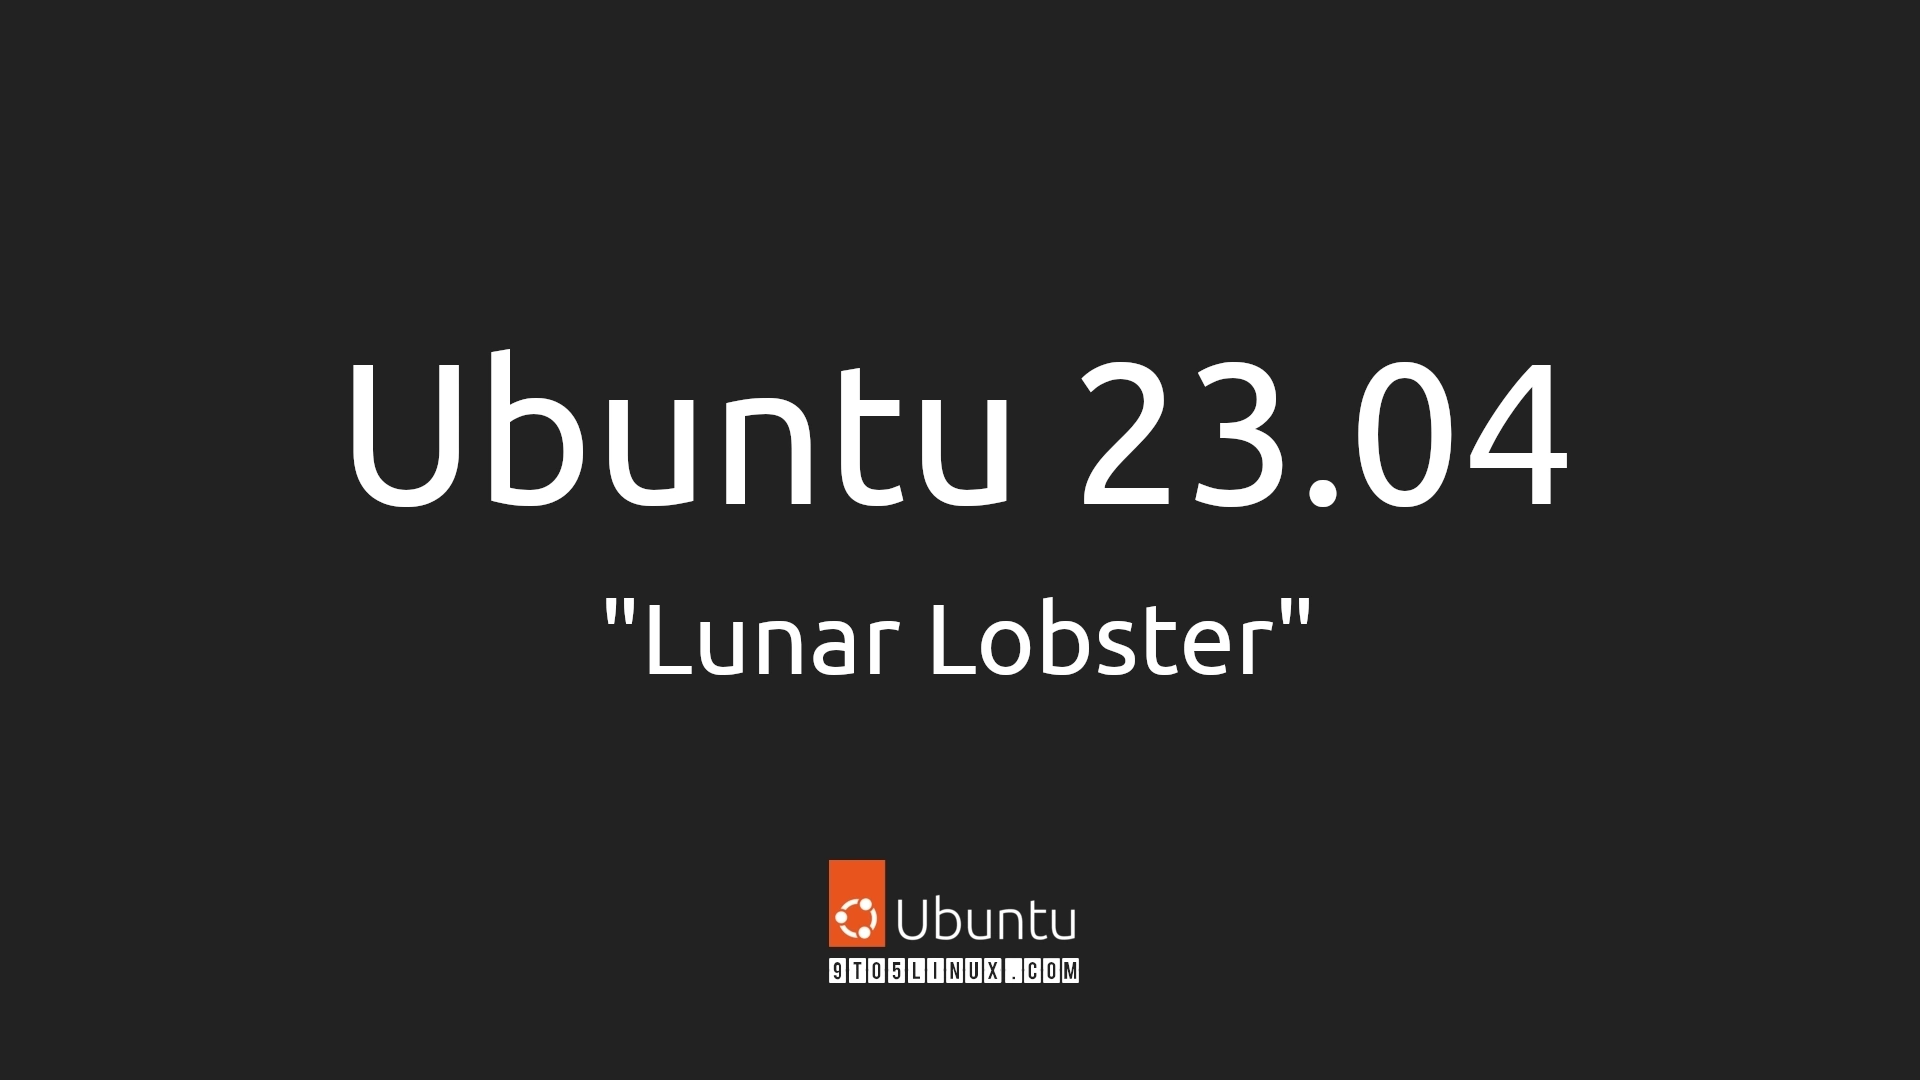 Ubuntu 23.04 “Lunar Lobster” Release Date Slated for April 20th, 2023